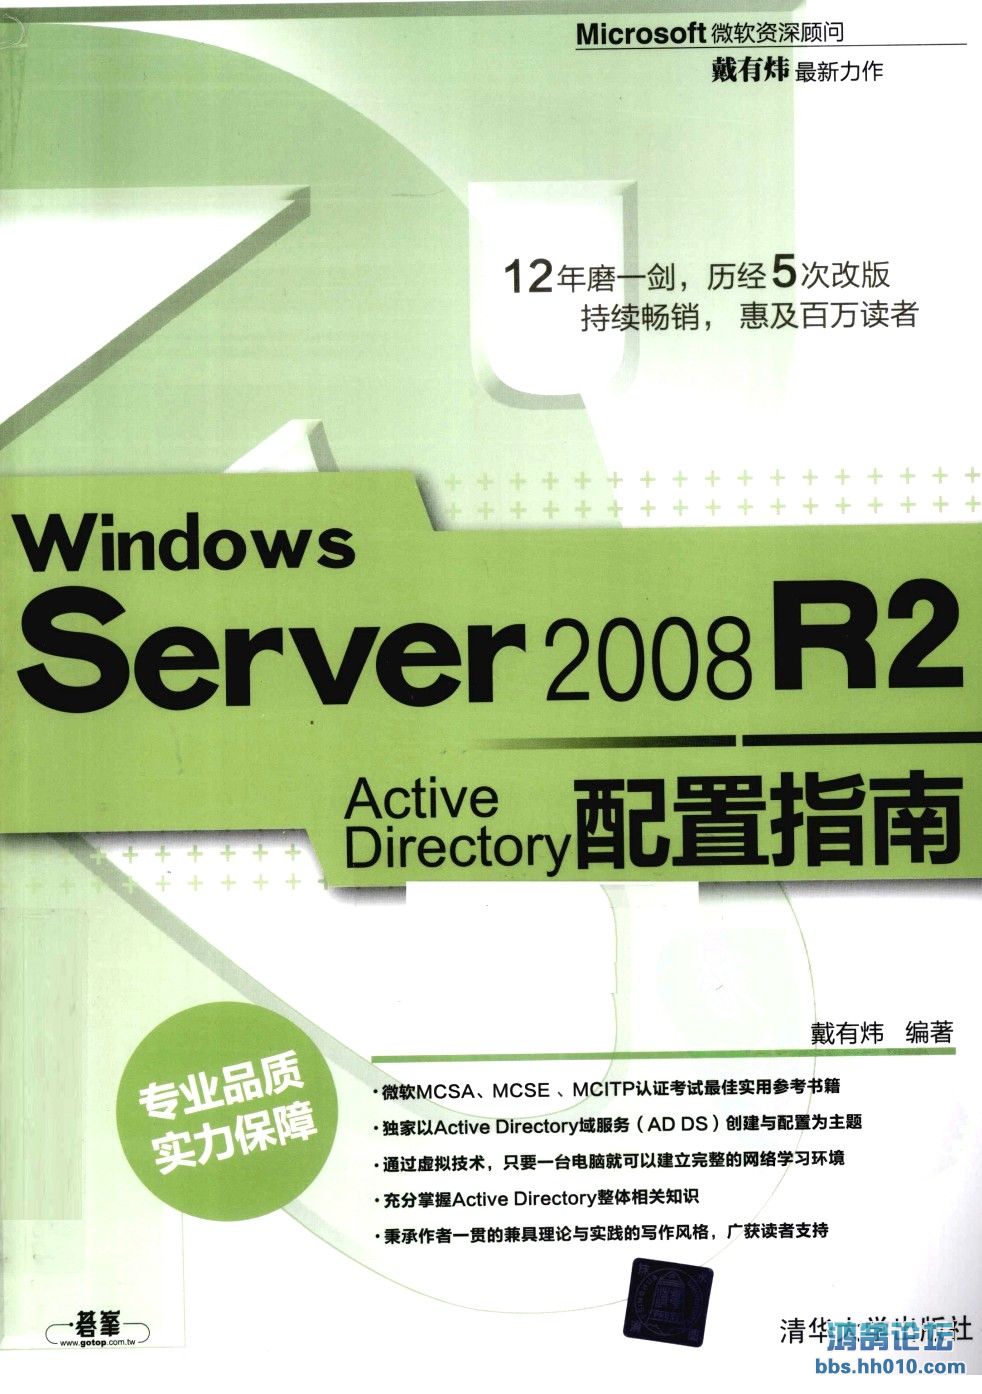 Windows.Server.2008.R2.Active.Directory.jpg